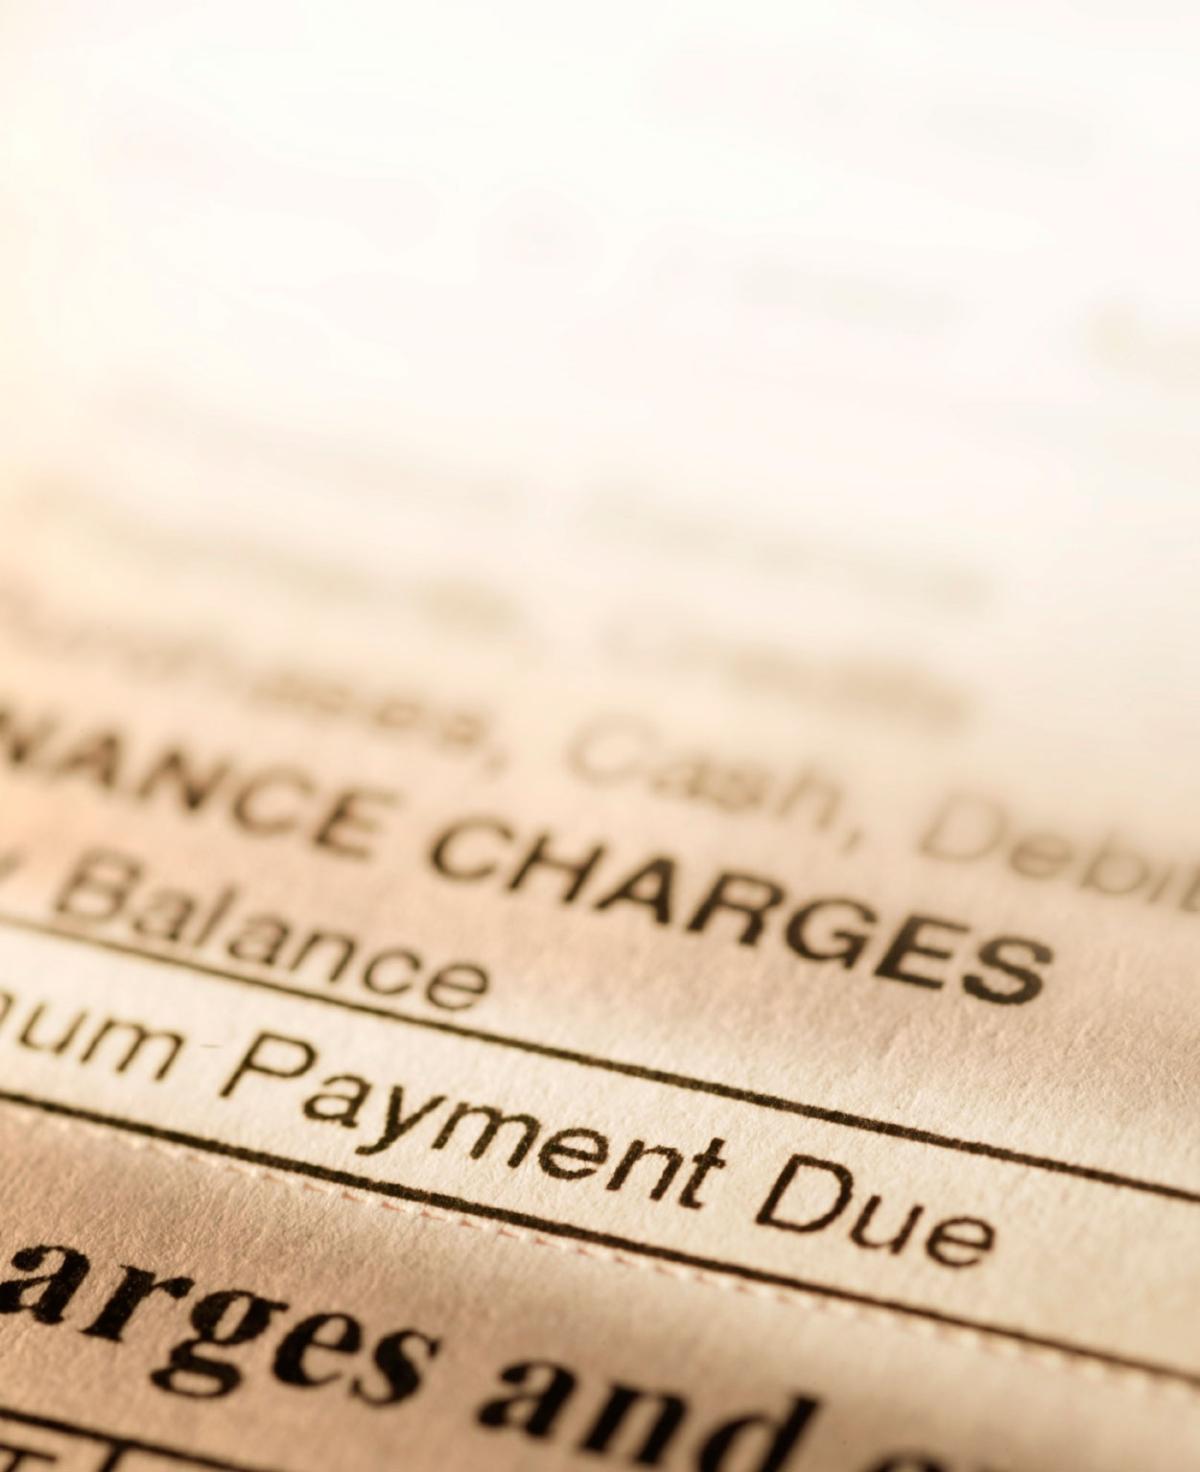 payment terms